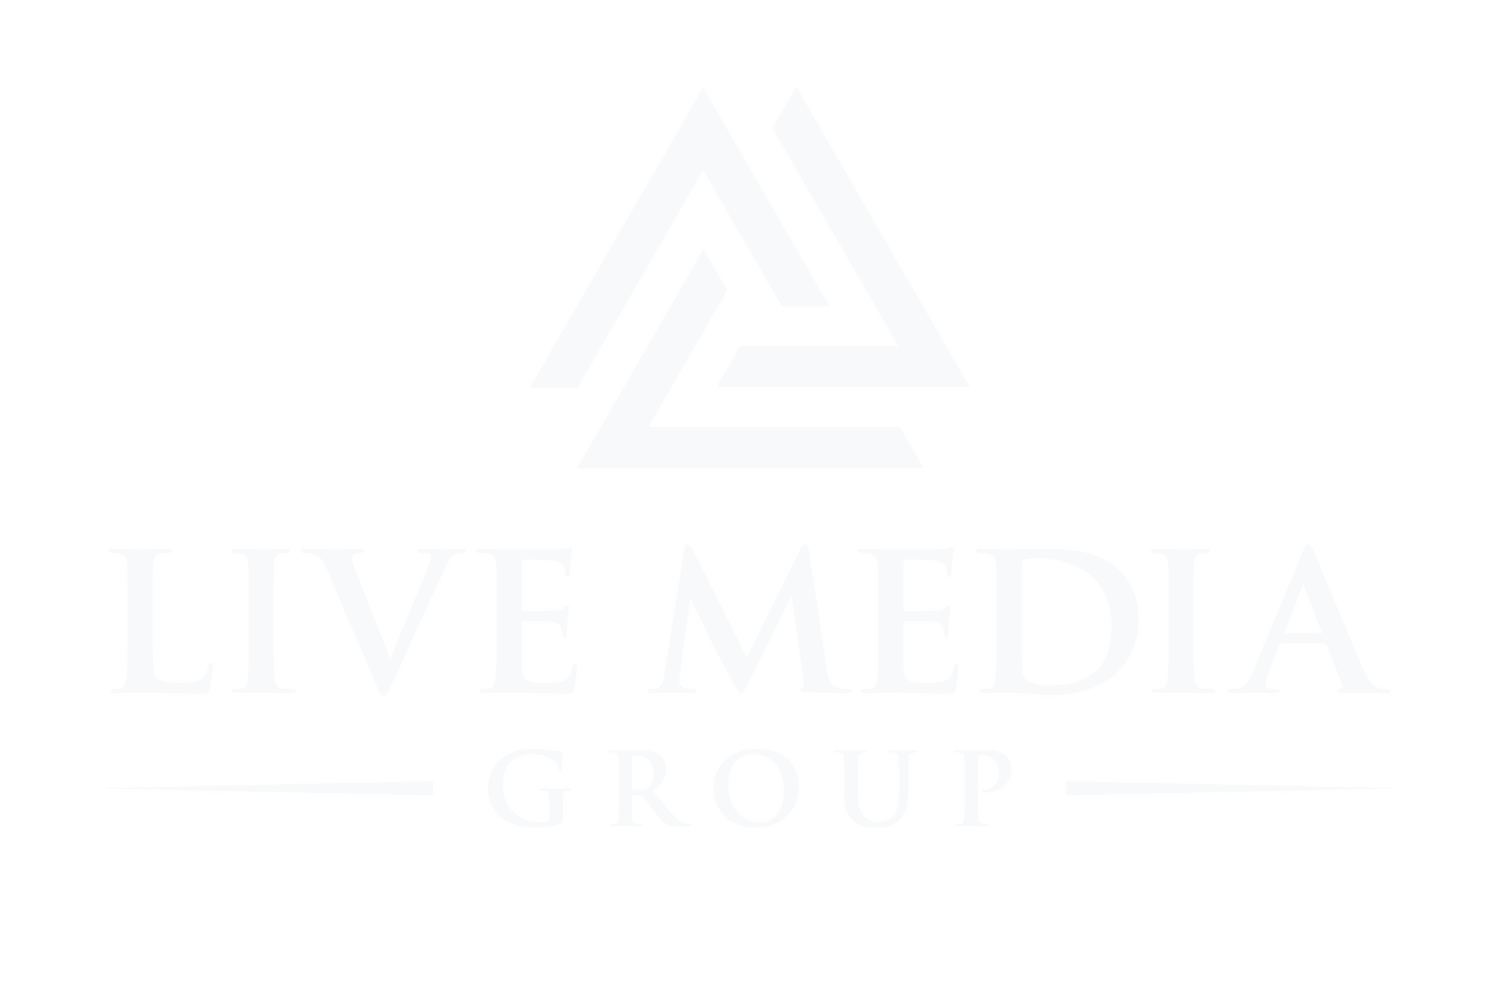 Live Media Group